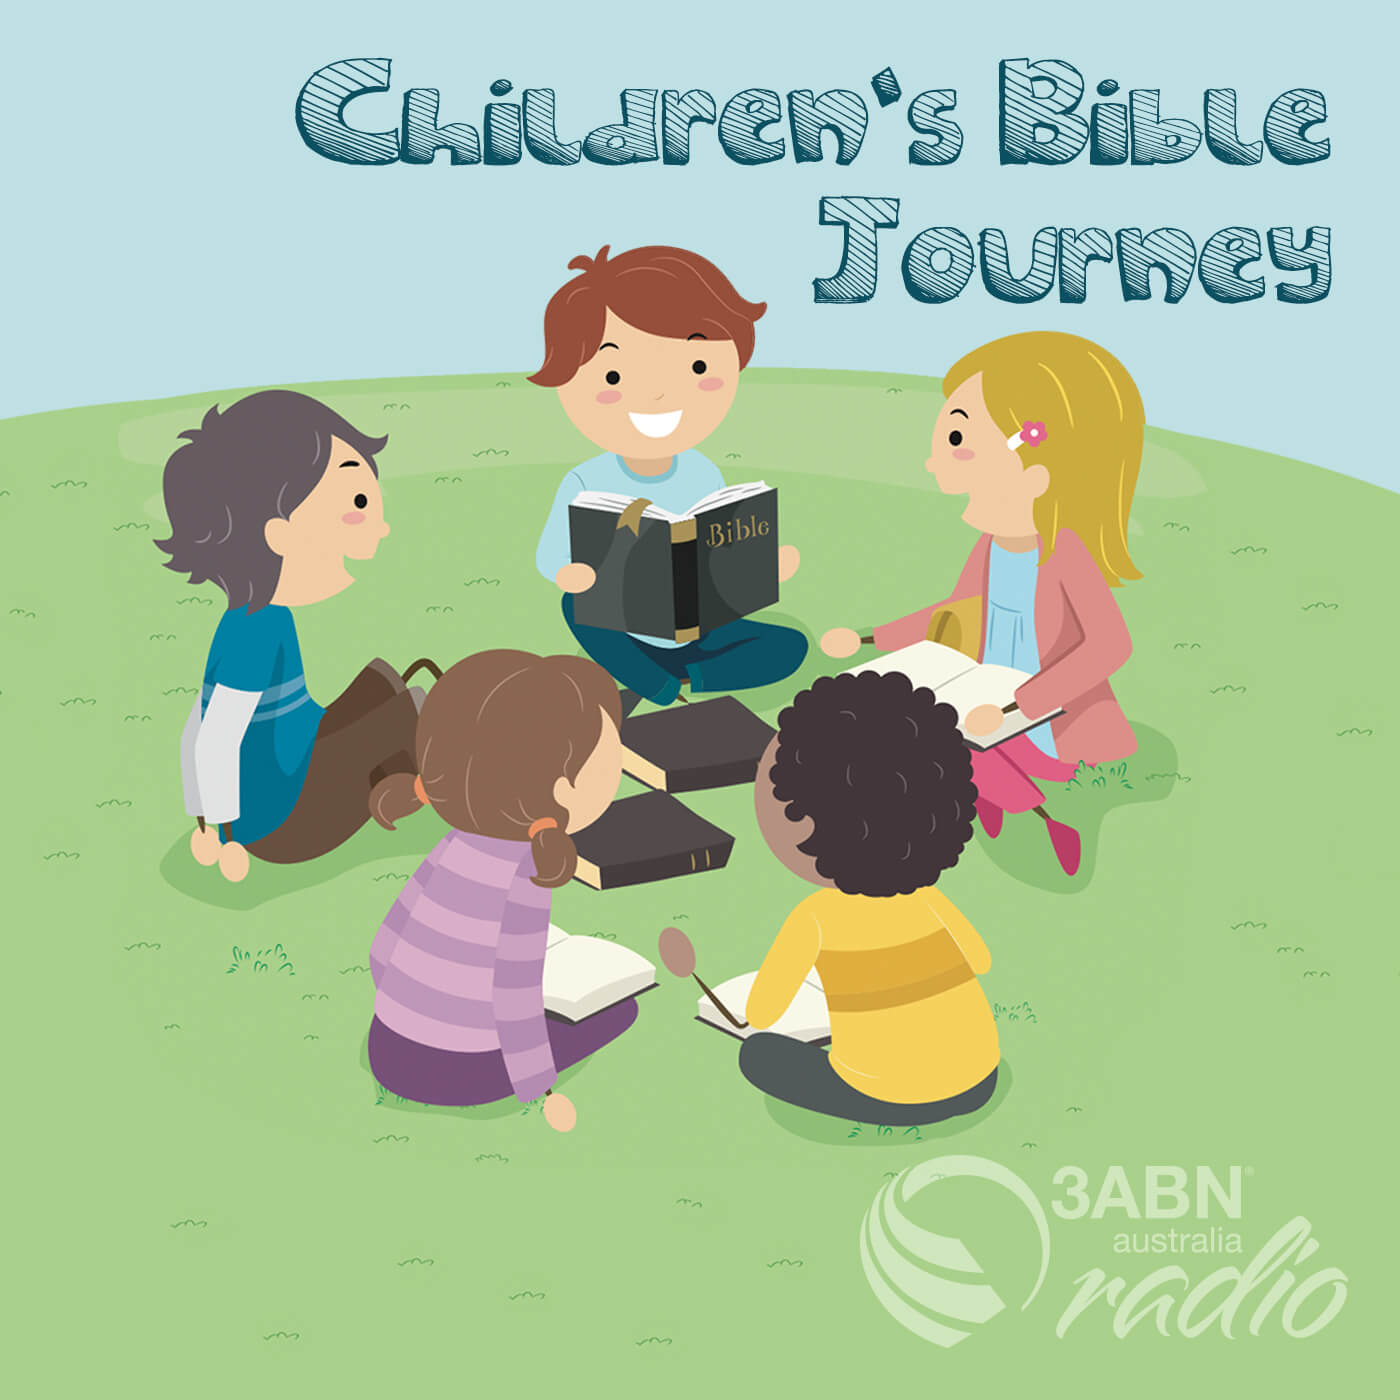 Children's Bible Journey - 2226